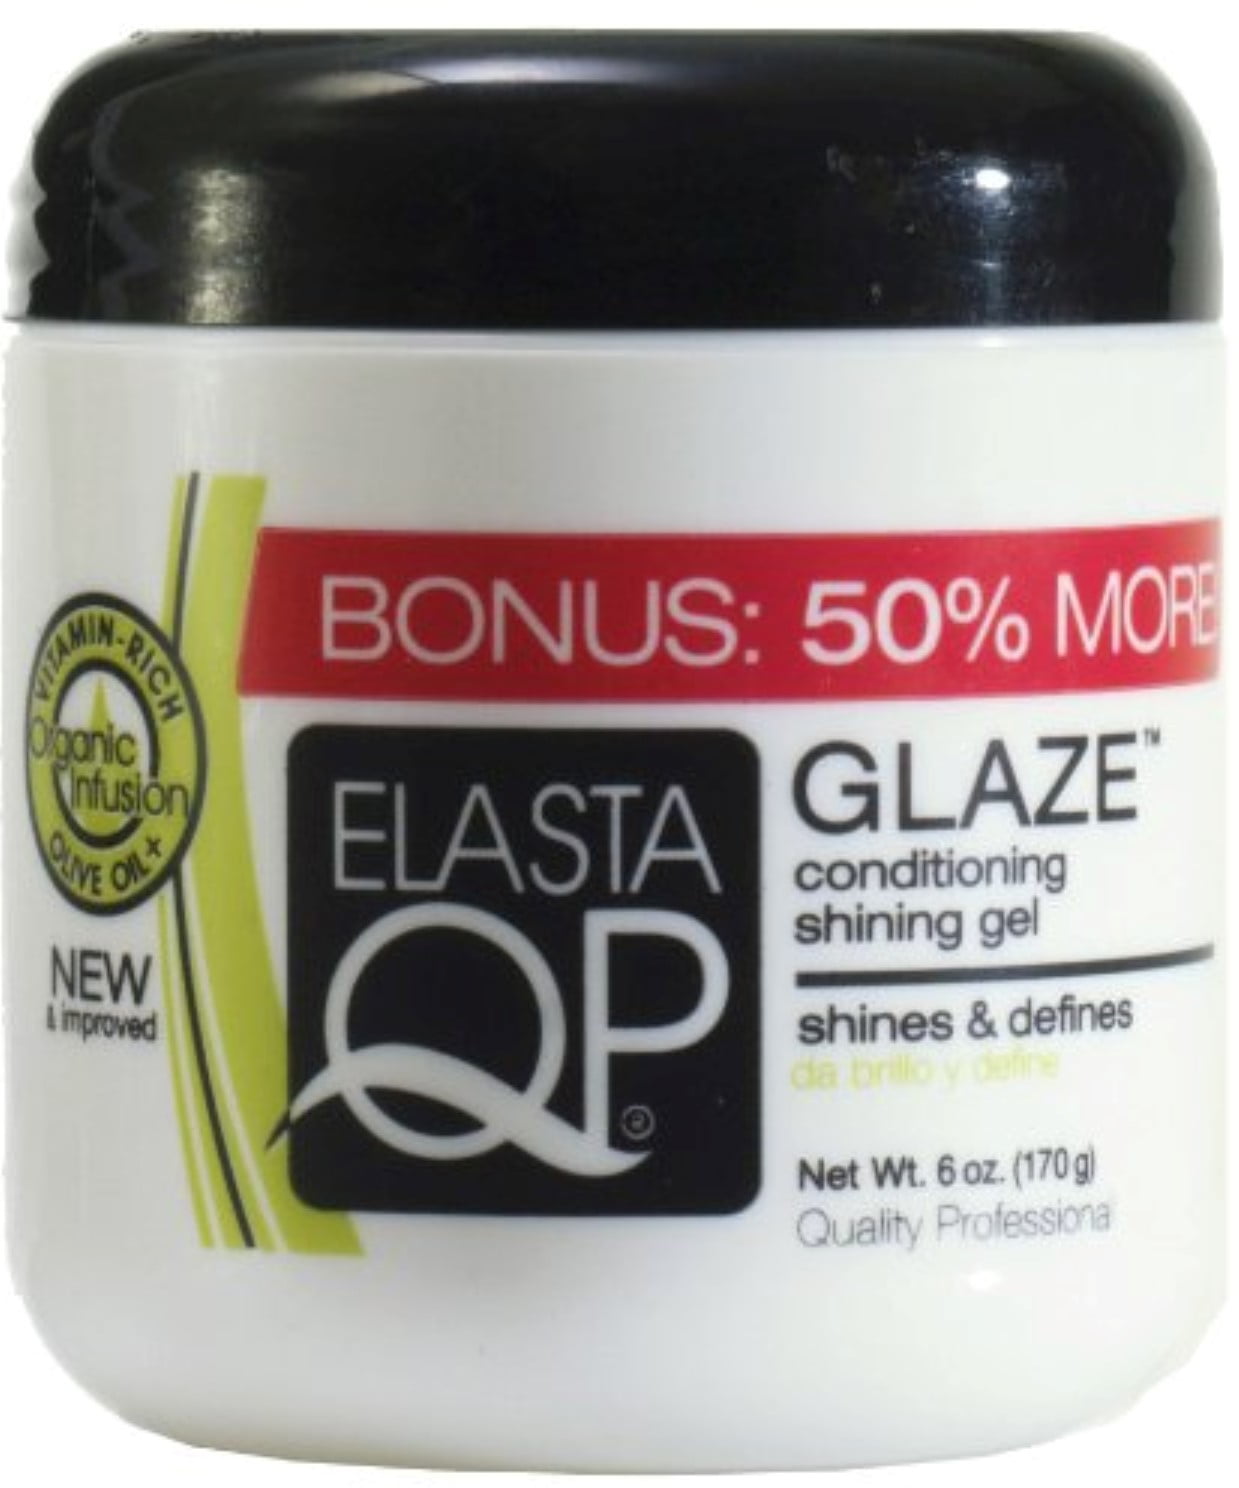 Elasta QP Glaze Conditioning Shining Gel, 6 oz (Pack of 3)